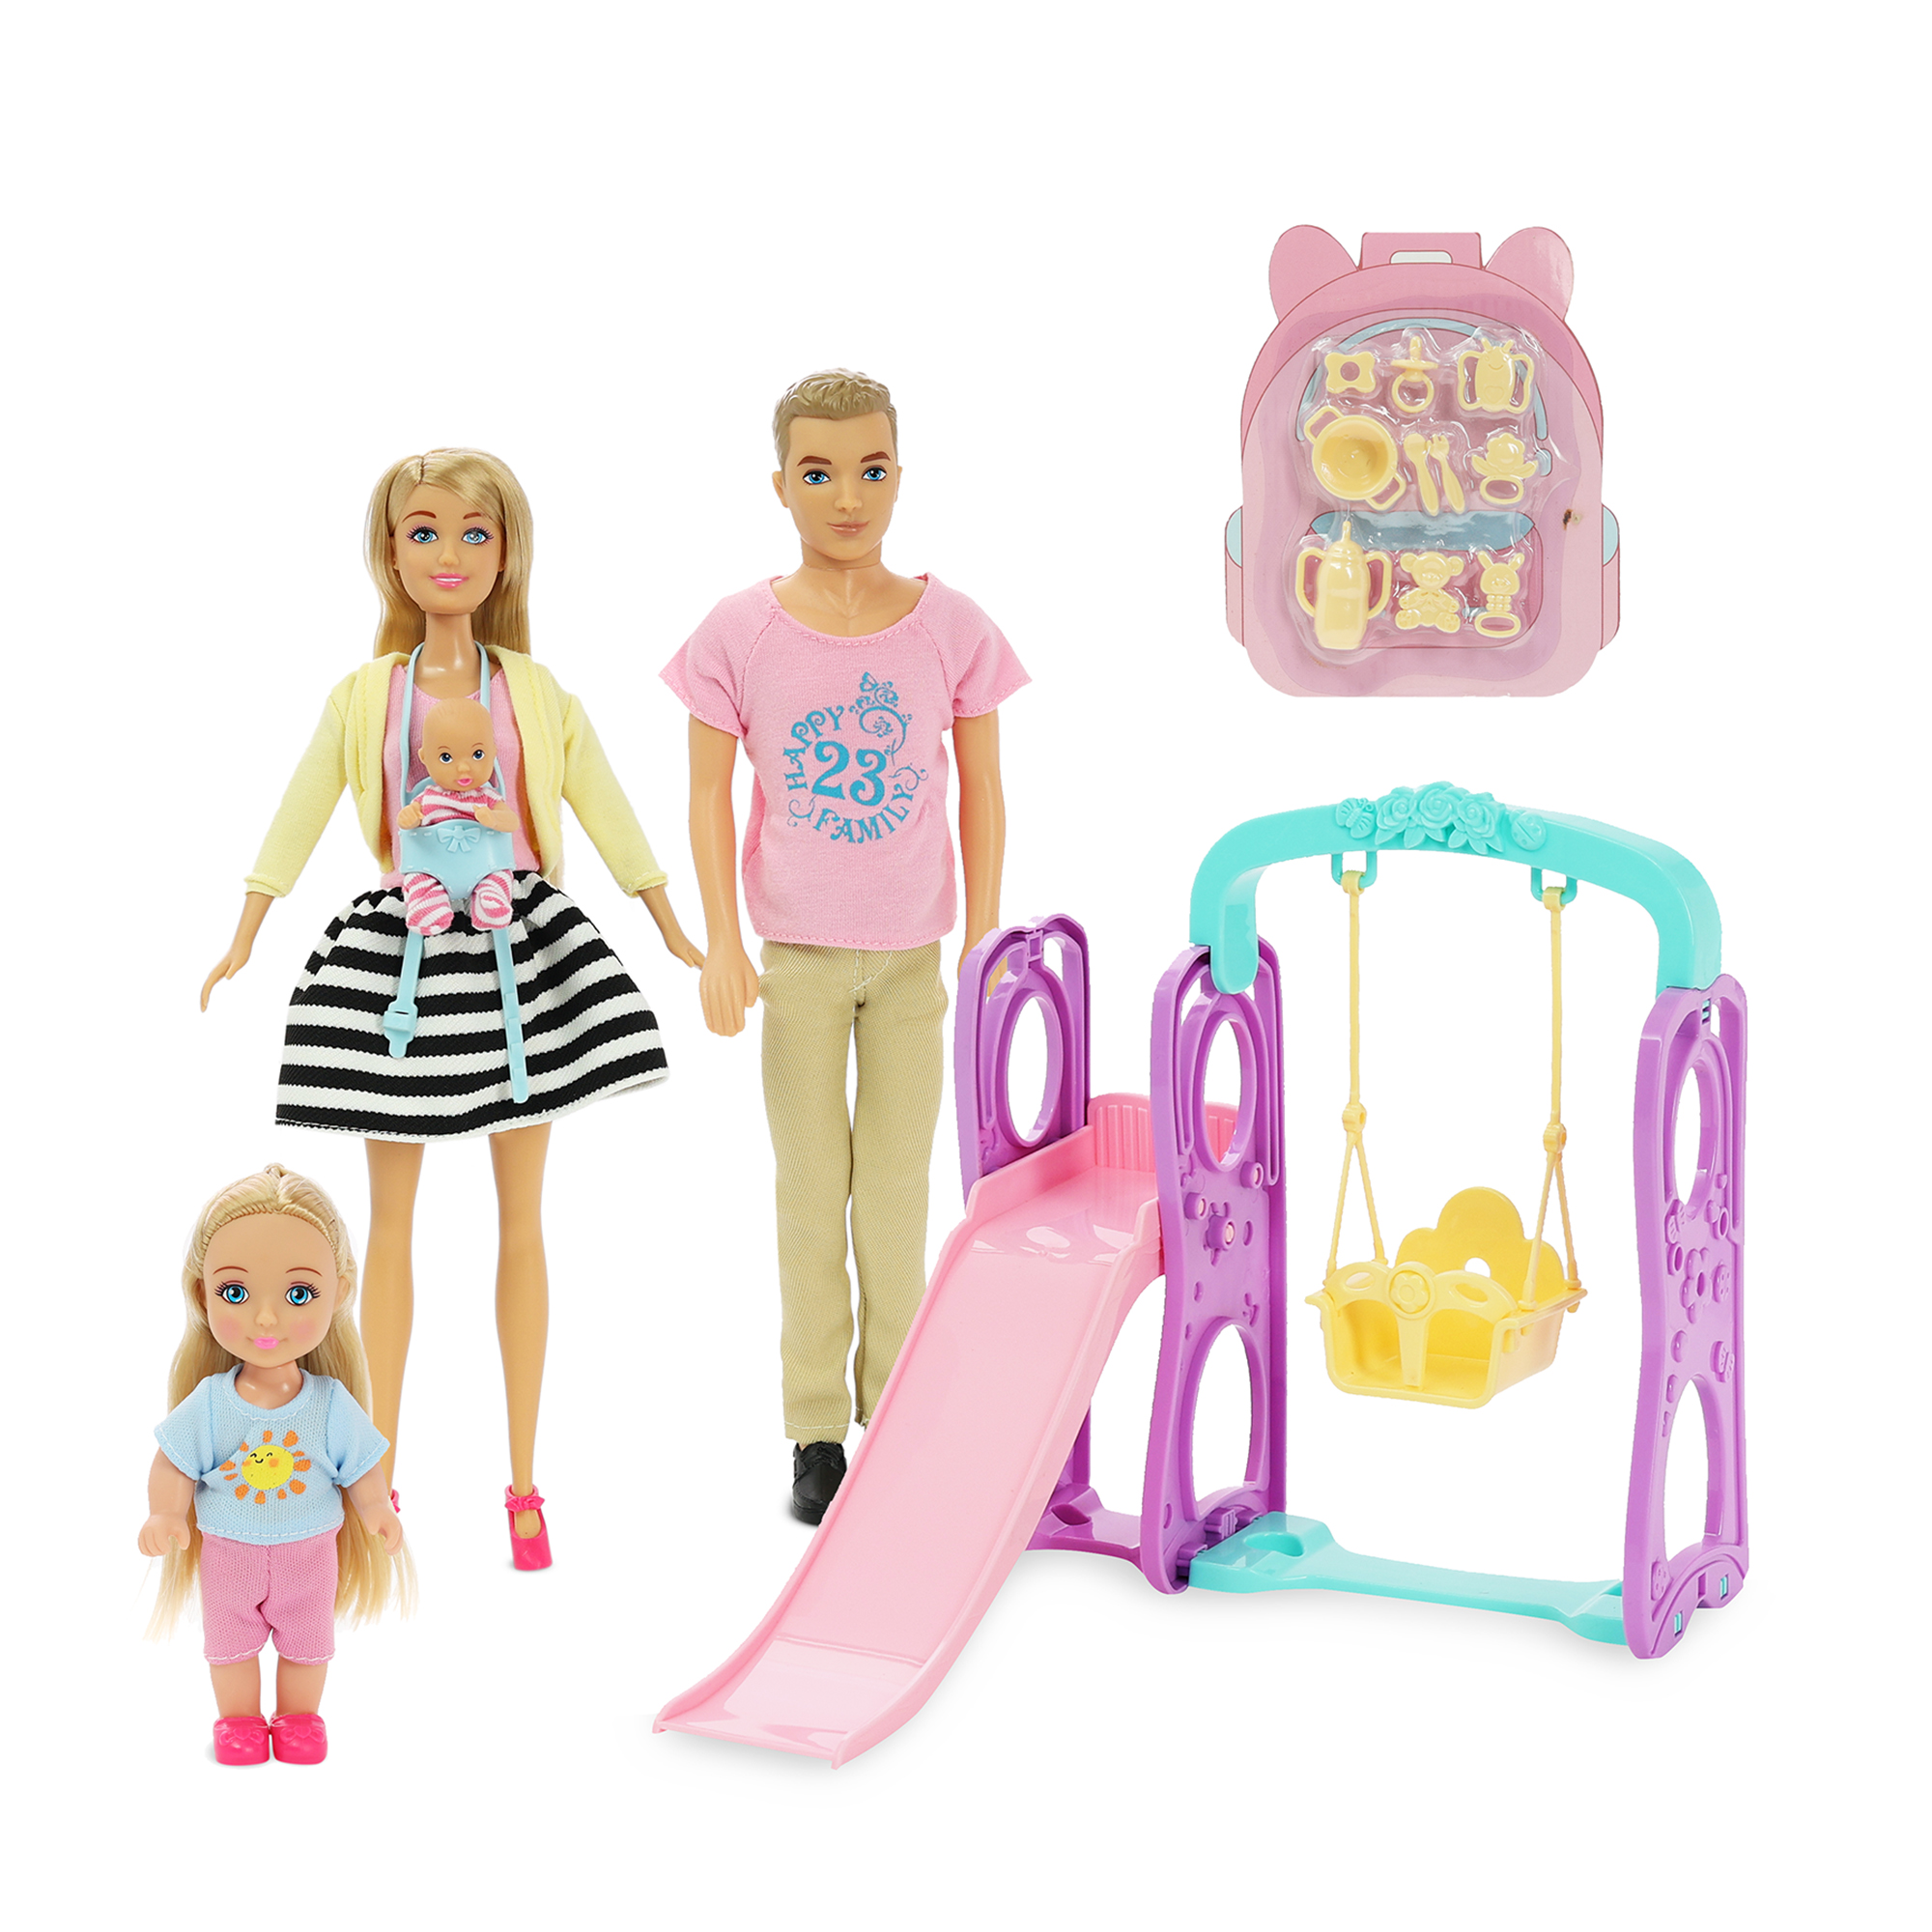 Набор кукол для девочек "Семья" на прогулке, 40х32х8см, ABS пластик